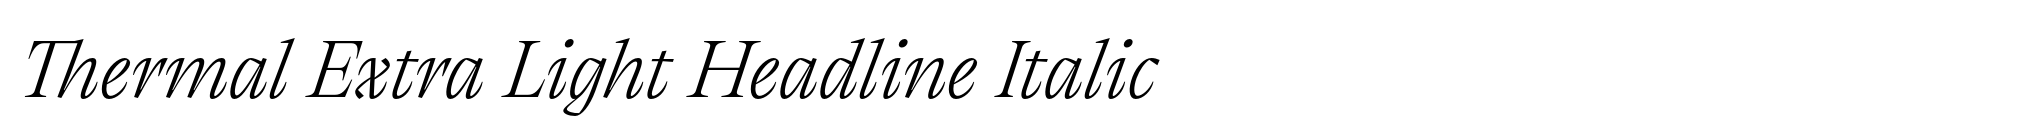 Thermal Extra Light Headline Italic image